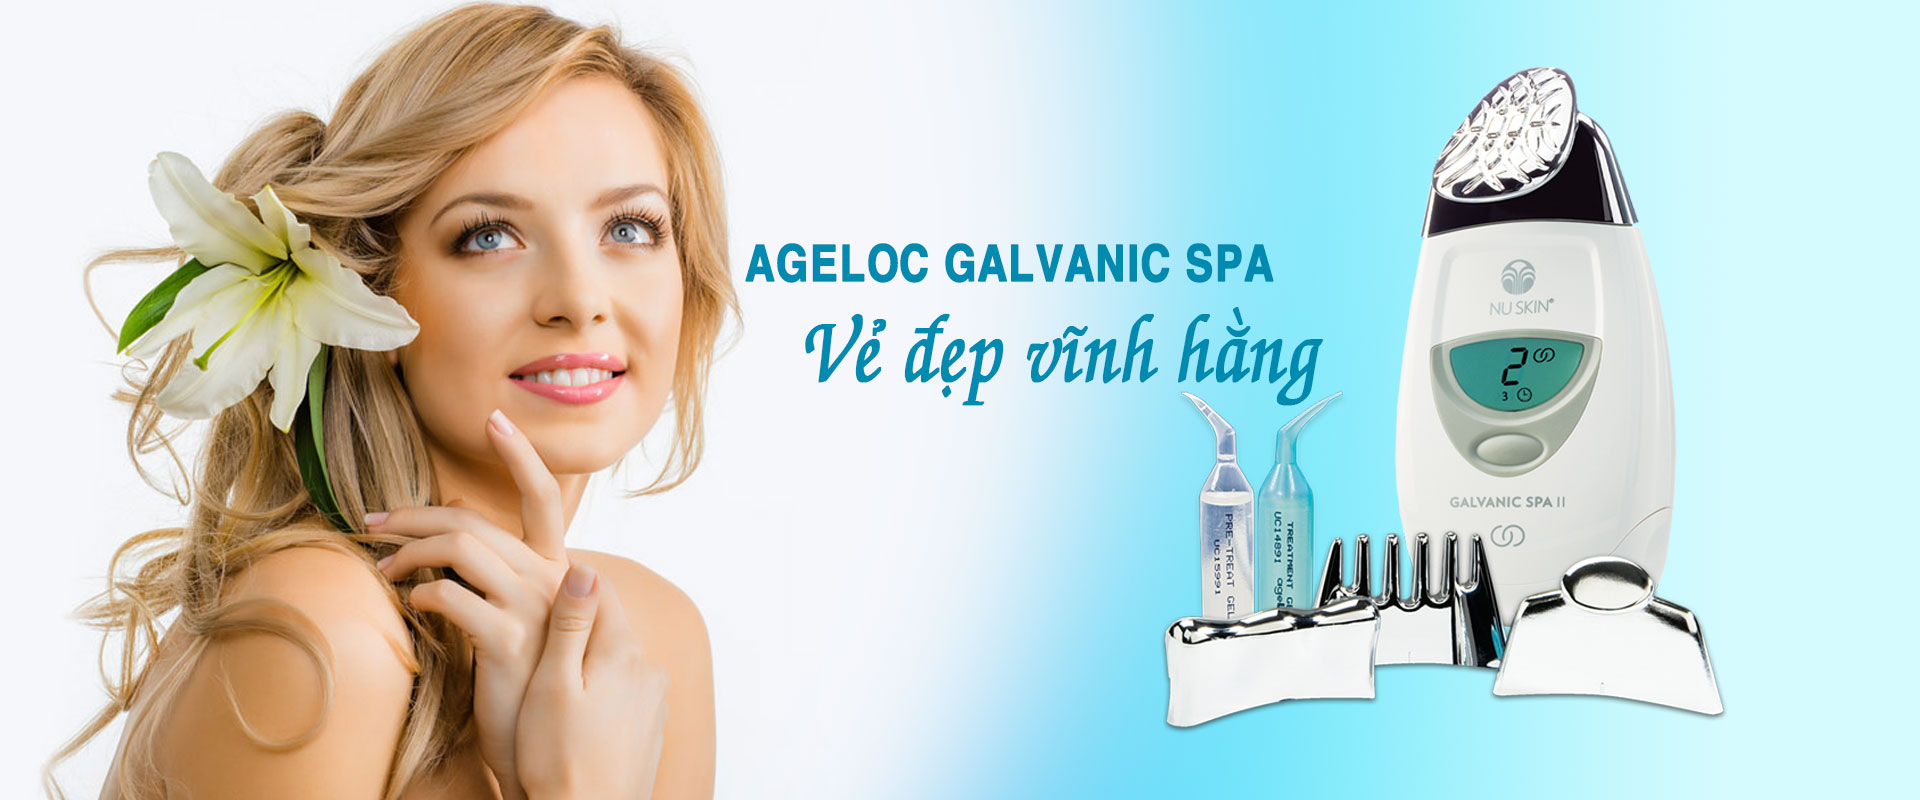 Ageloc-galvanic-face-spa-my-pham-nuskin-003